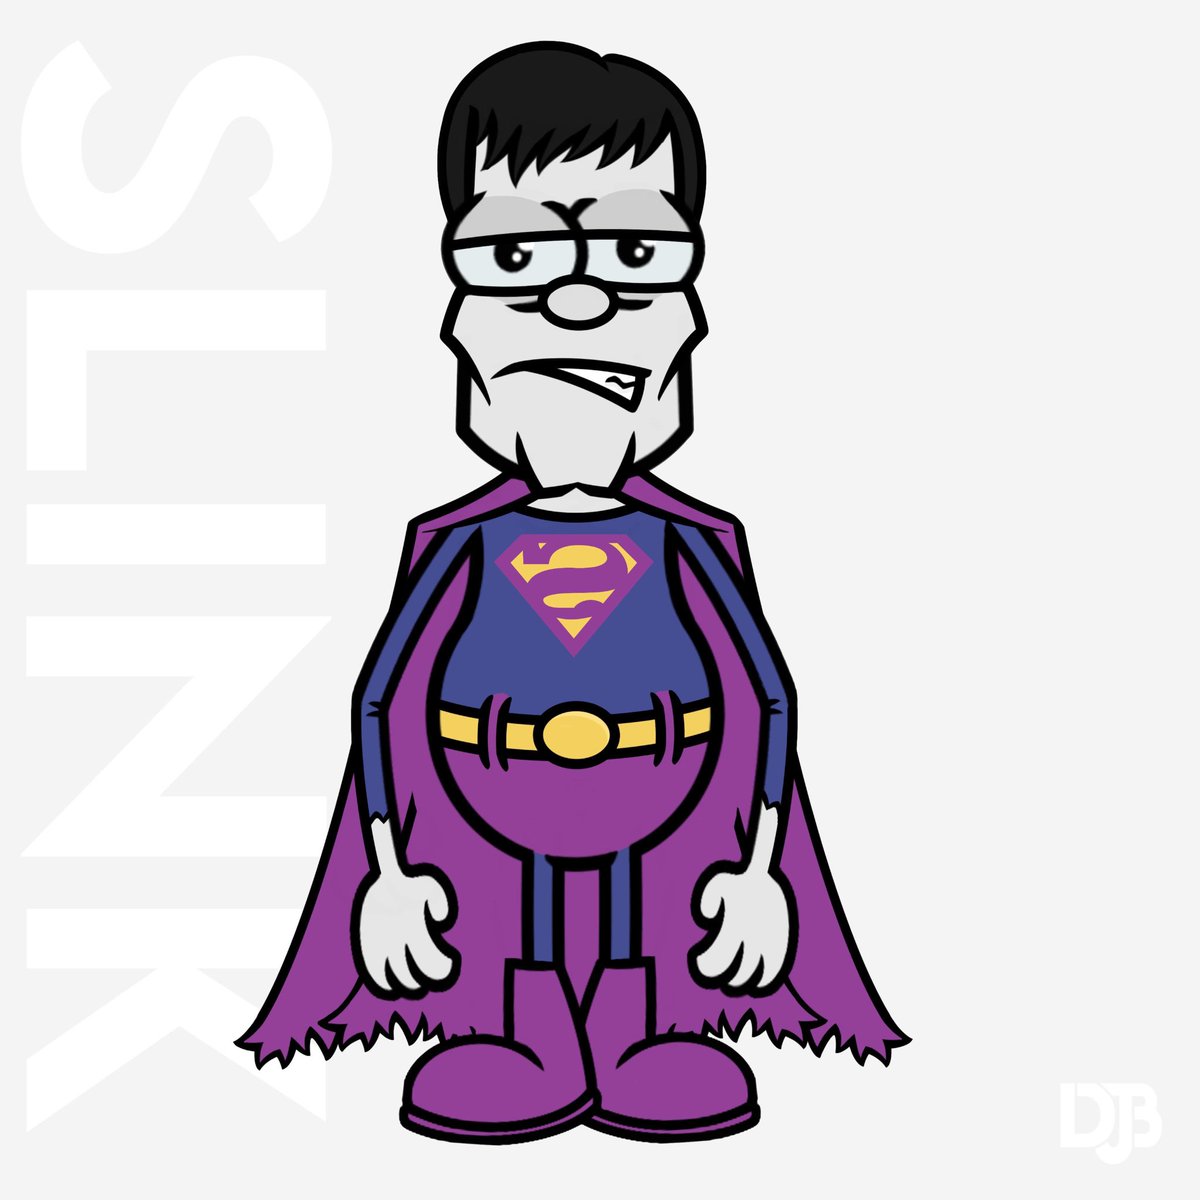 Bizarro got SLINKd #superman #bizarro #manofsteel #dccomics #superheroes #slink #slinkd #djbu #artistofinstagram #artwork #artist #characterdesign